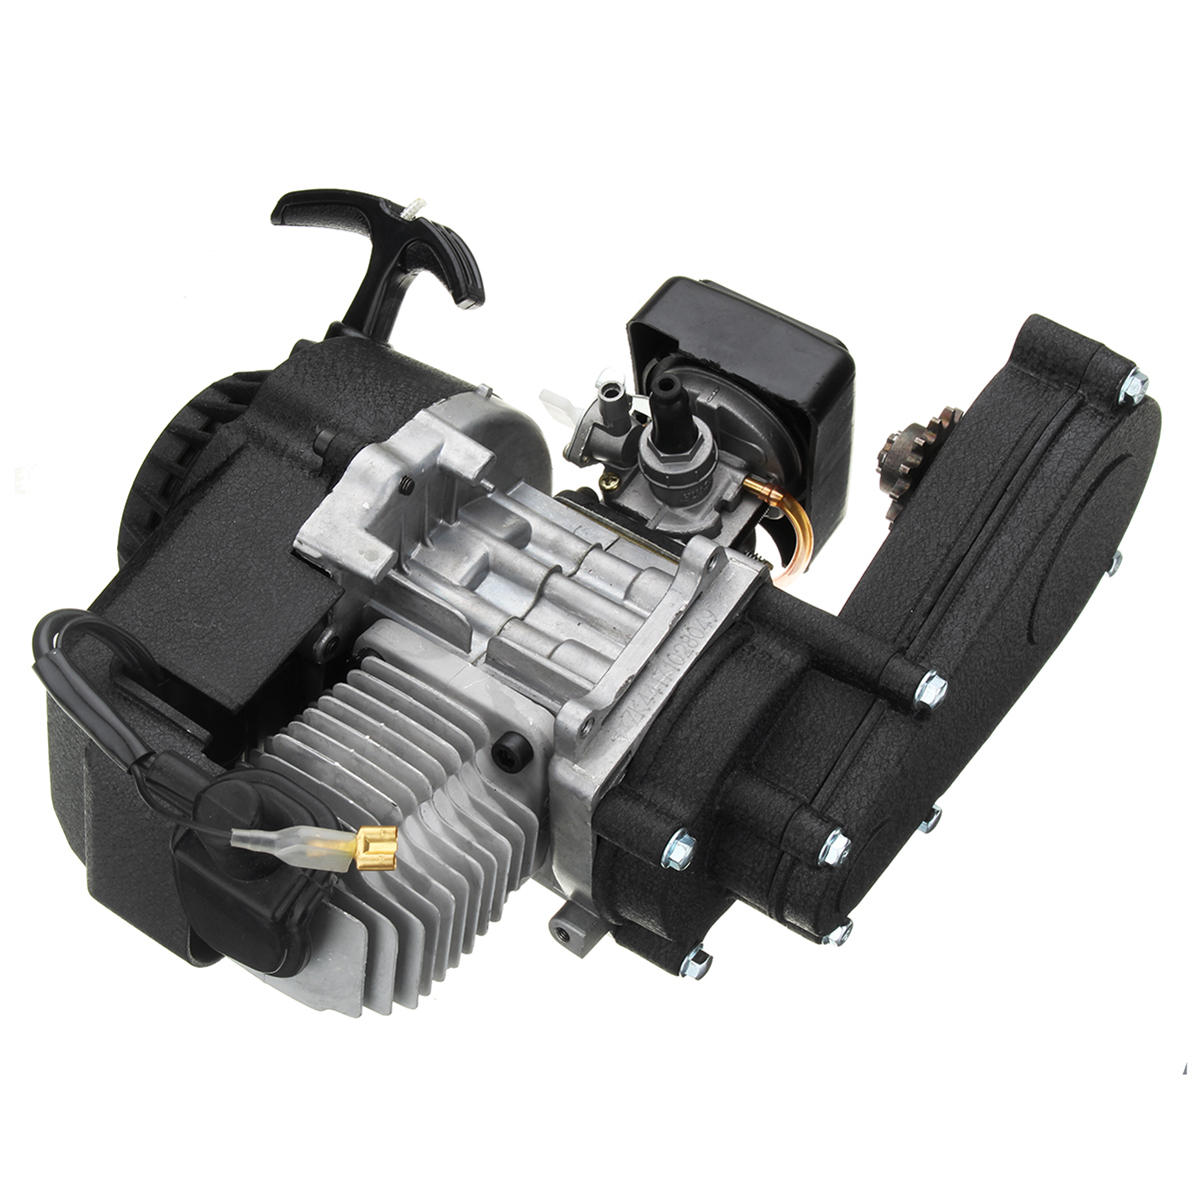 Image of 49cc Engine 2-Stroke Pull Start With Transmission For Mini Motor ATV Quad Bike